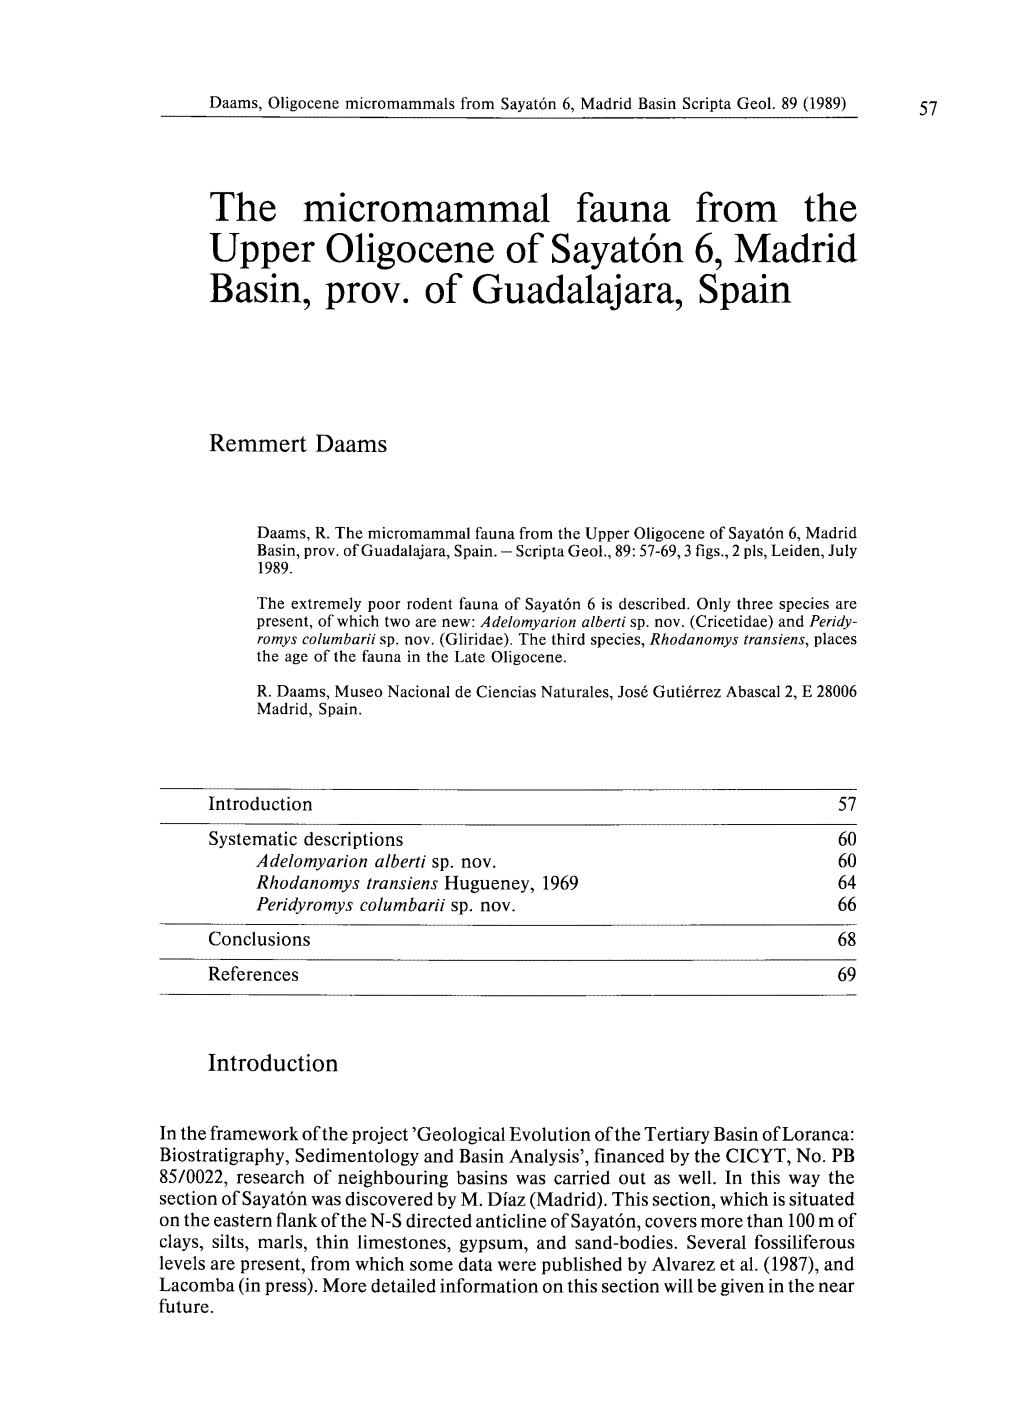 The Micromammal Fauna from the Upper Oligocene of Sayatón 6, Madrid Basin, Prov. of Guadalajara, Spain